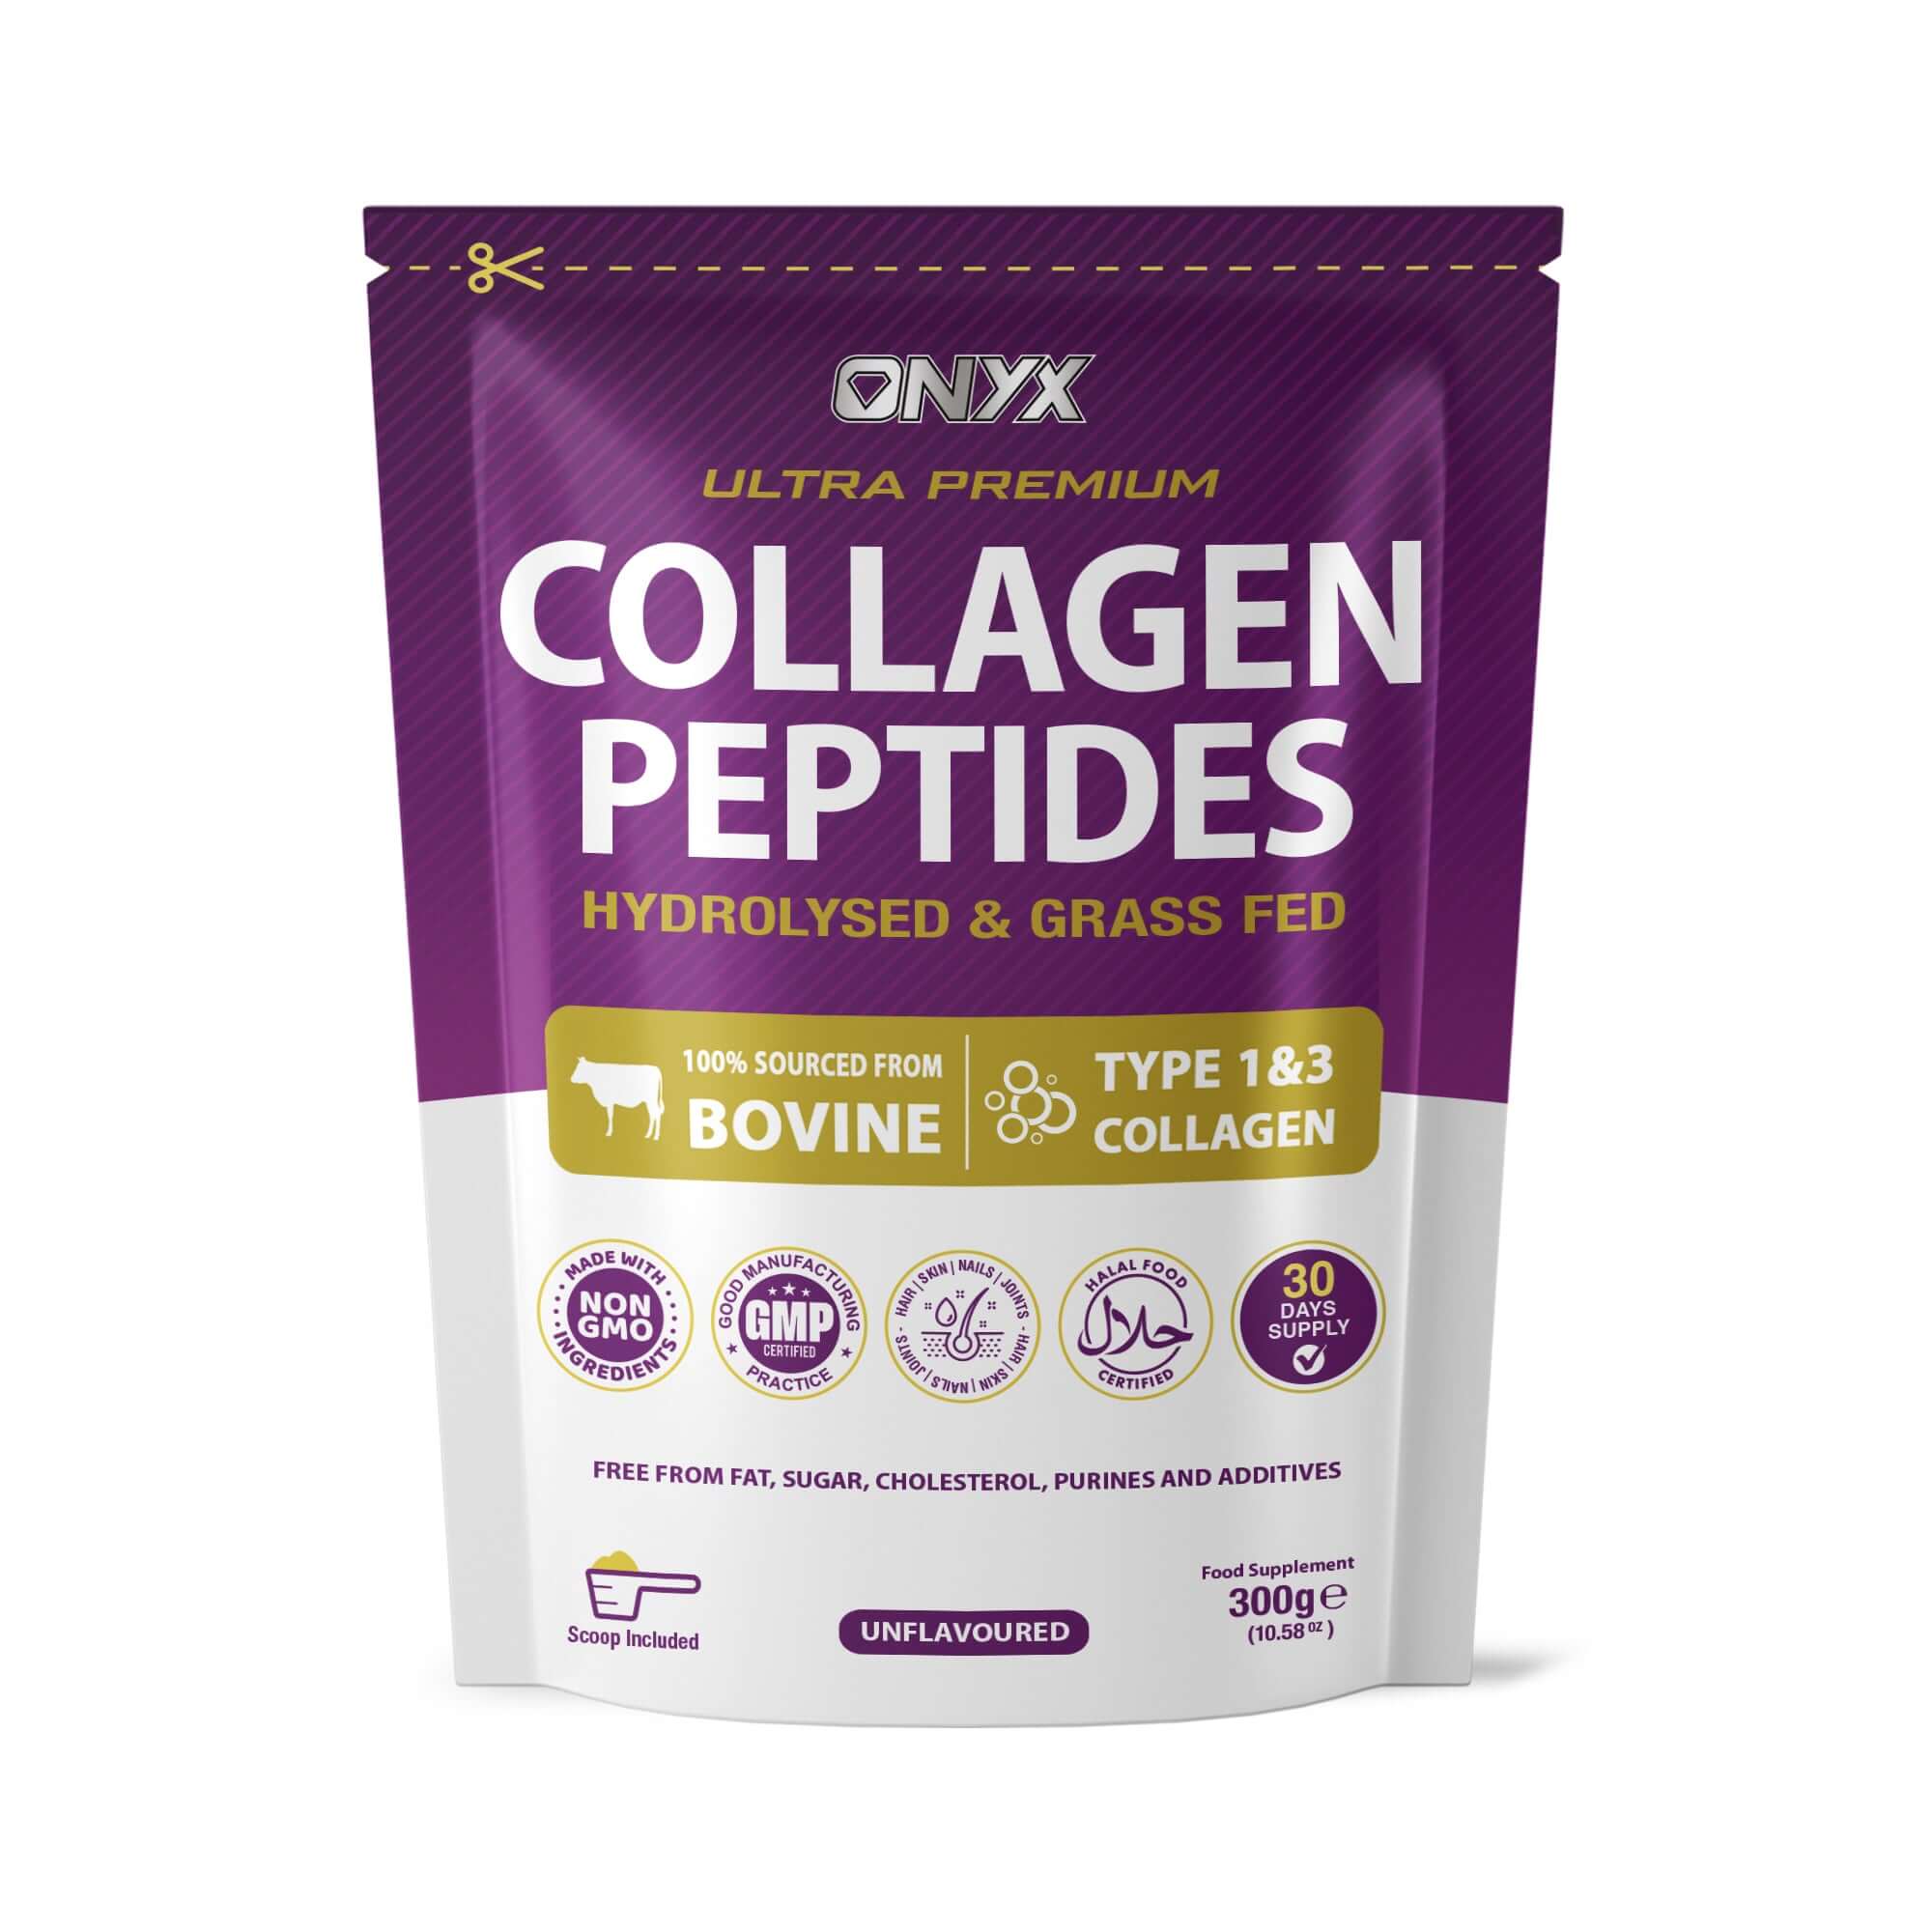 Onyx Ultra Premium Collagen Peptides powder, hydrolysed, grass-fed, 300g pack, type 1 & 3 bovine collagen, non-GMO, halal, kosher